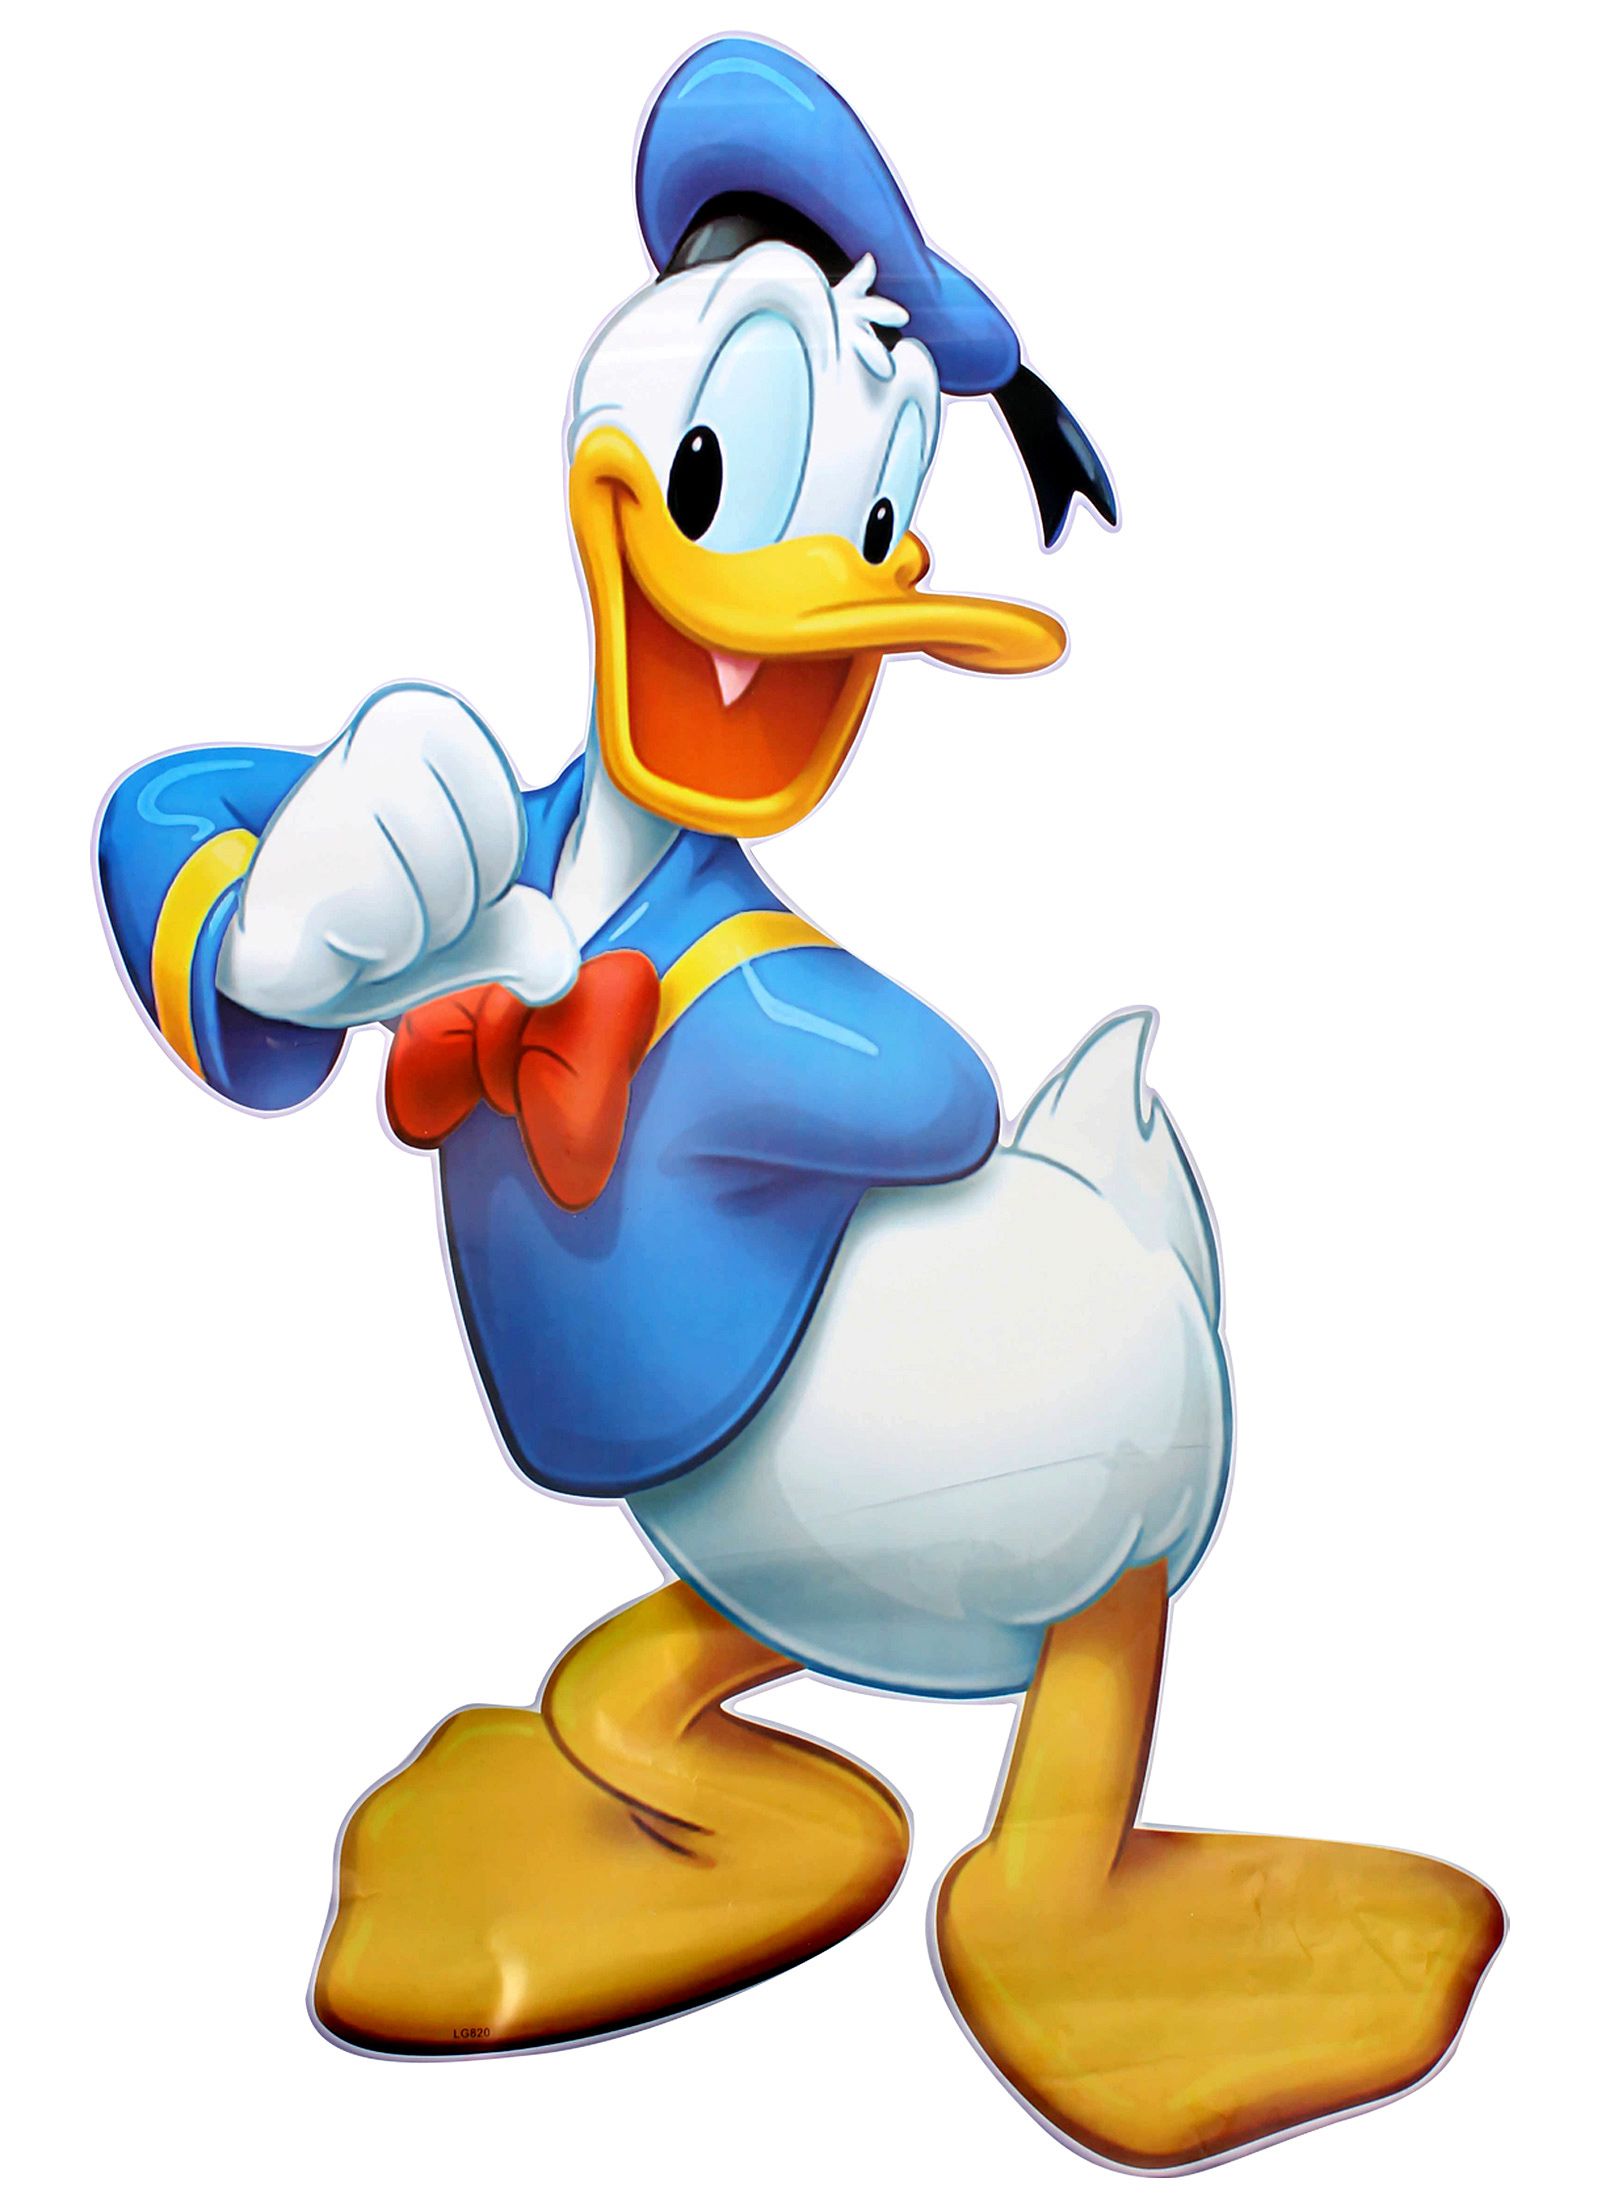 Donald Duck | Iannielli Legend Wiki | Fandom